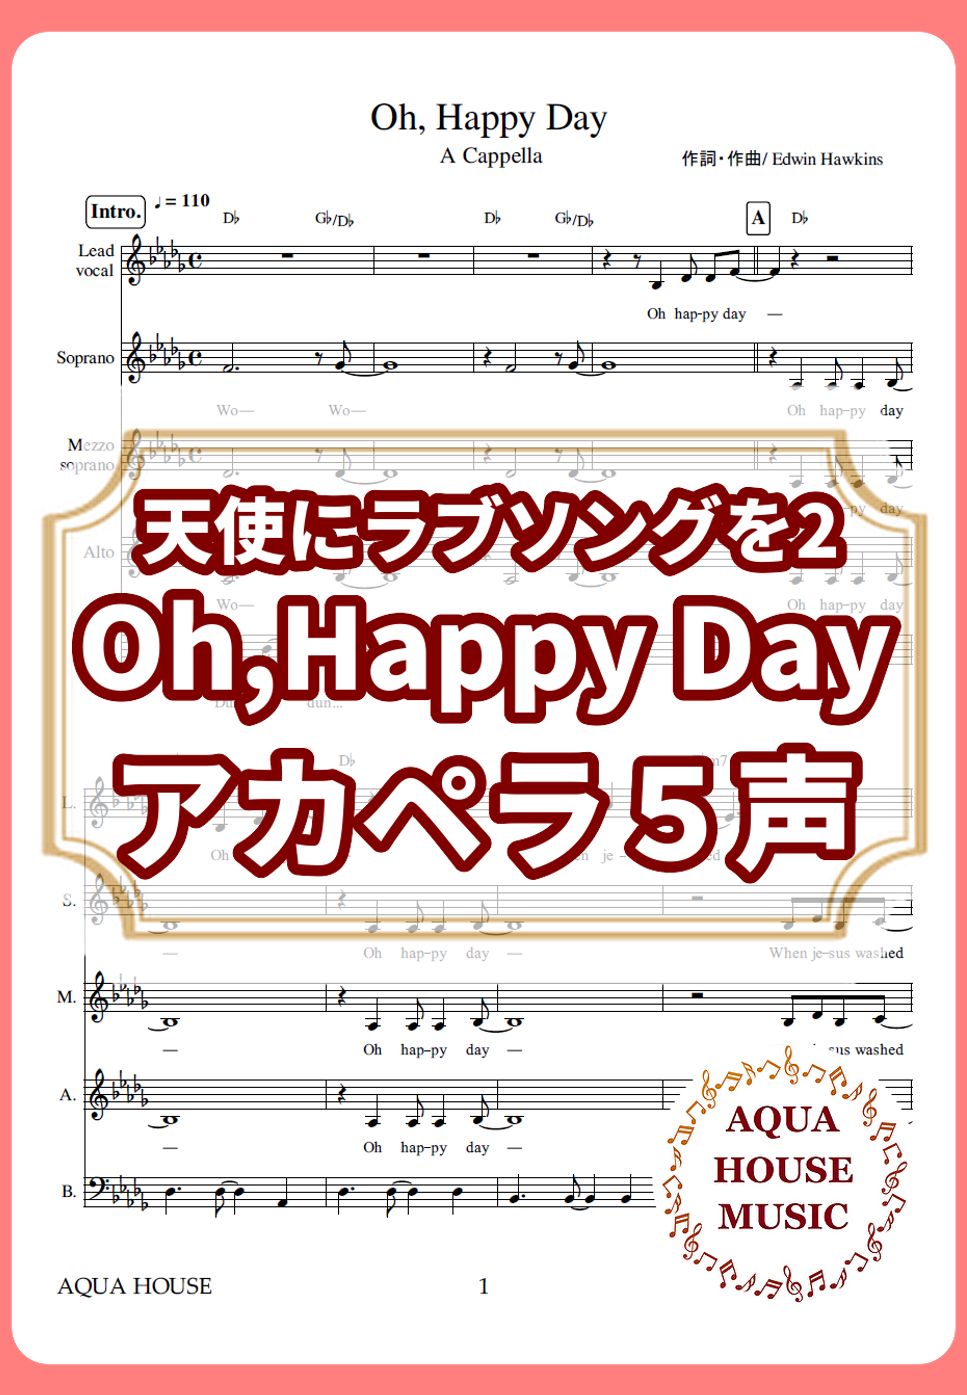 Oh Happy Day/天使にラブソングを2 (アカペラ楽譜♪5声ボイパなし) by 飯田 亜紗子